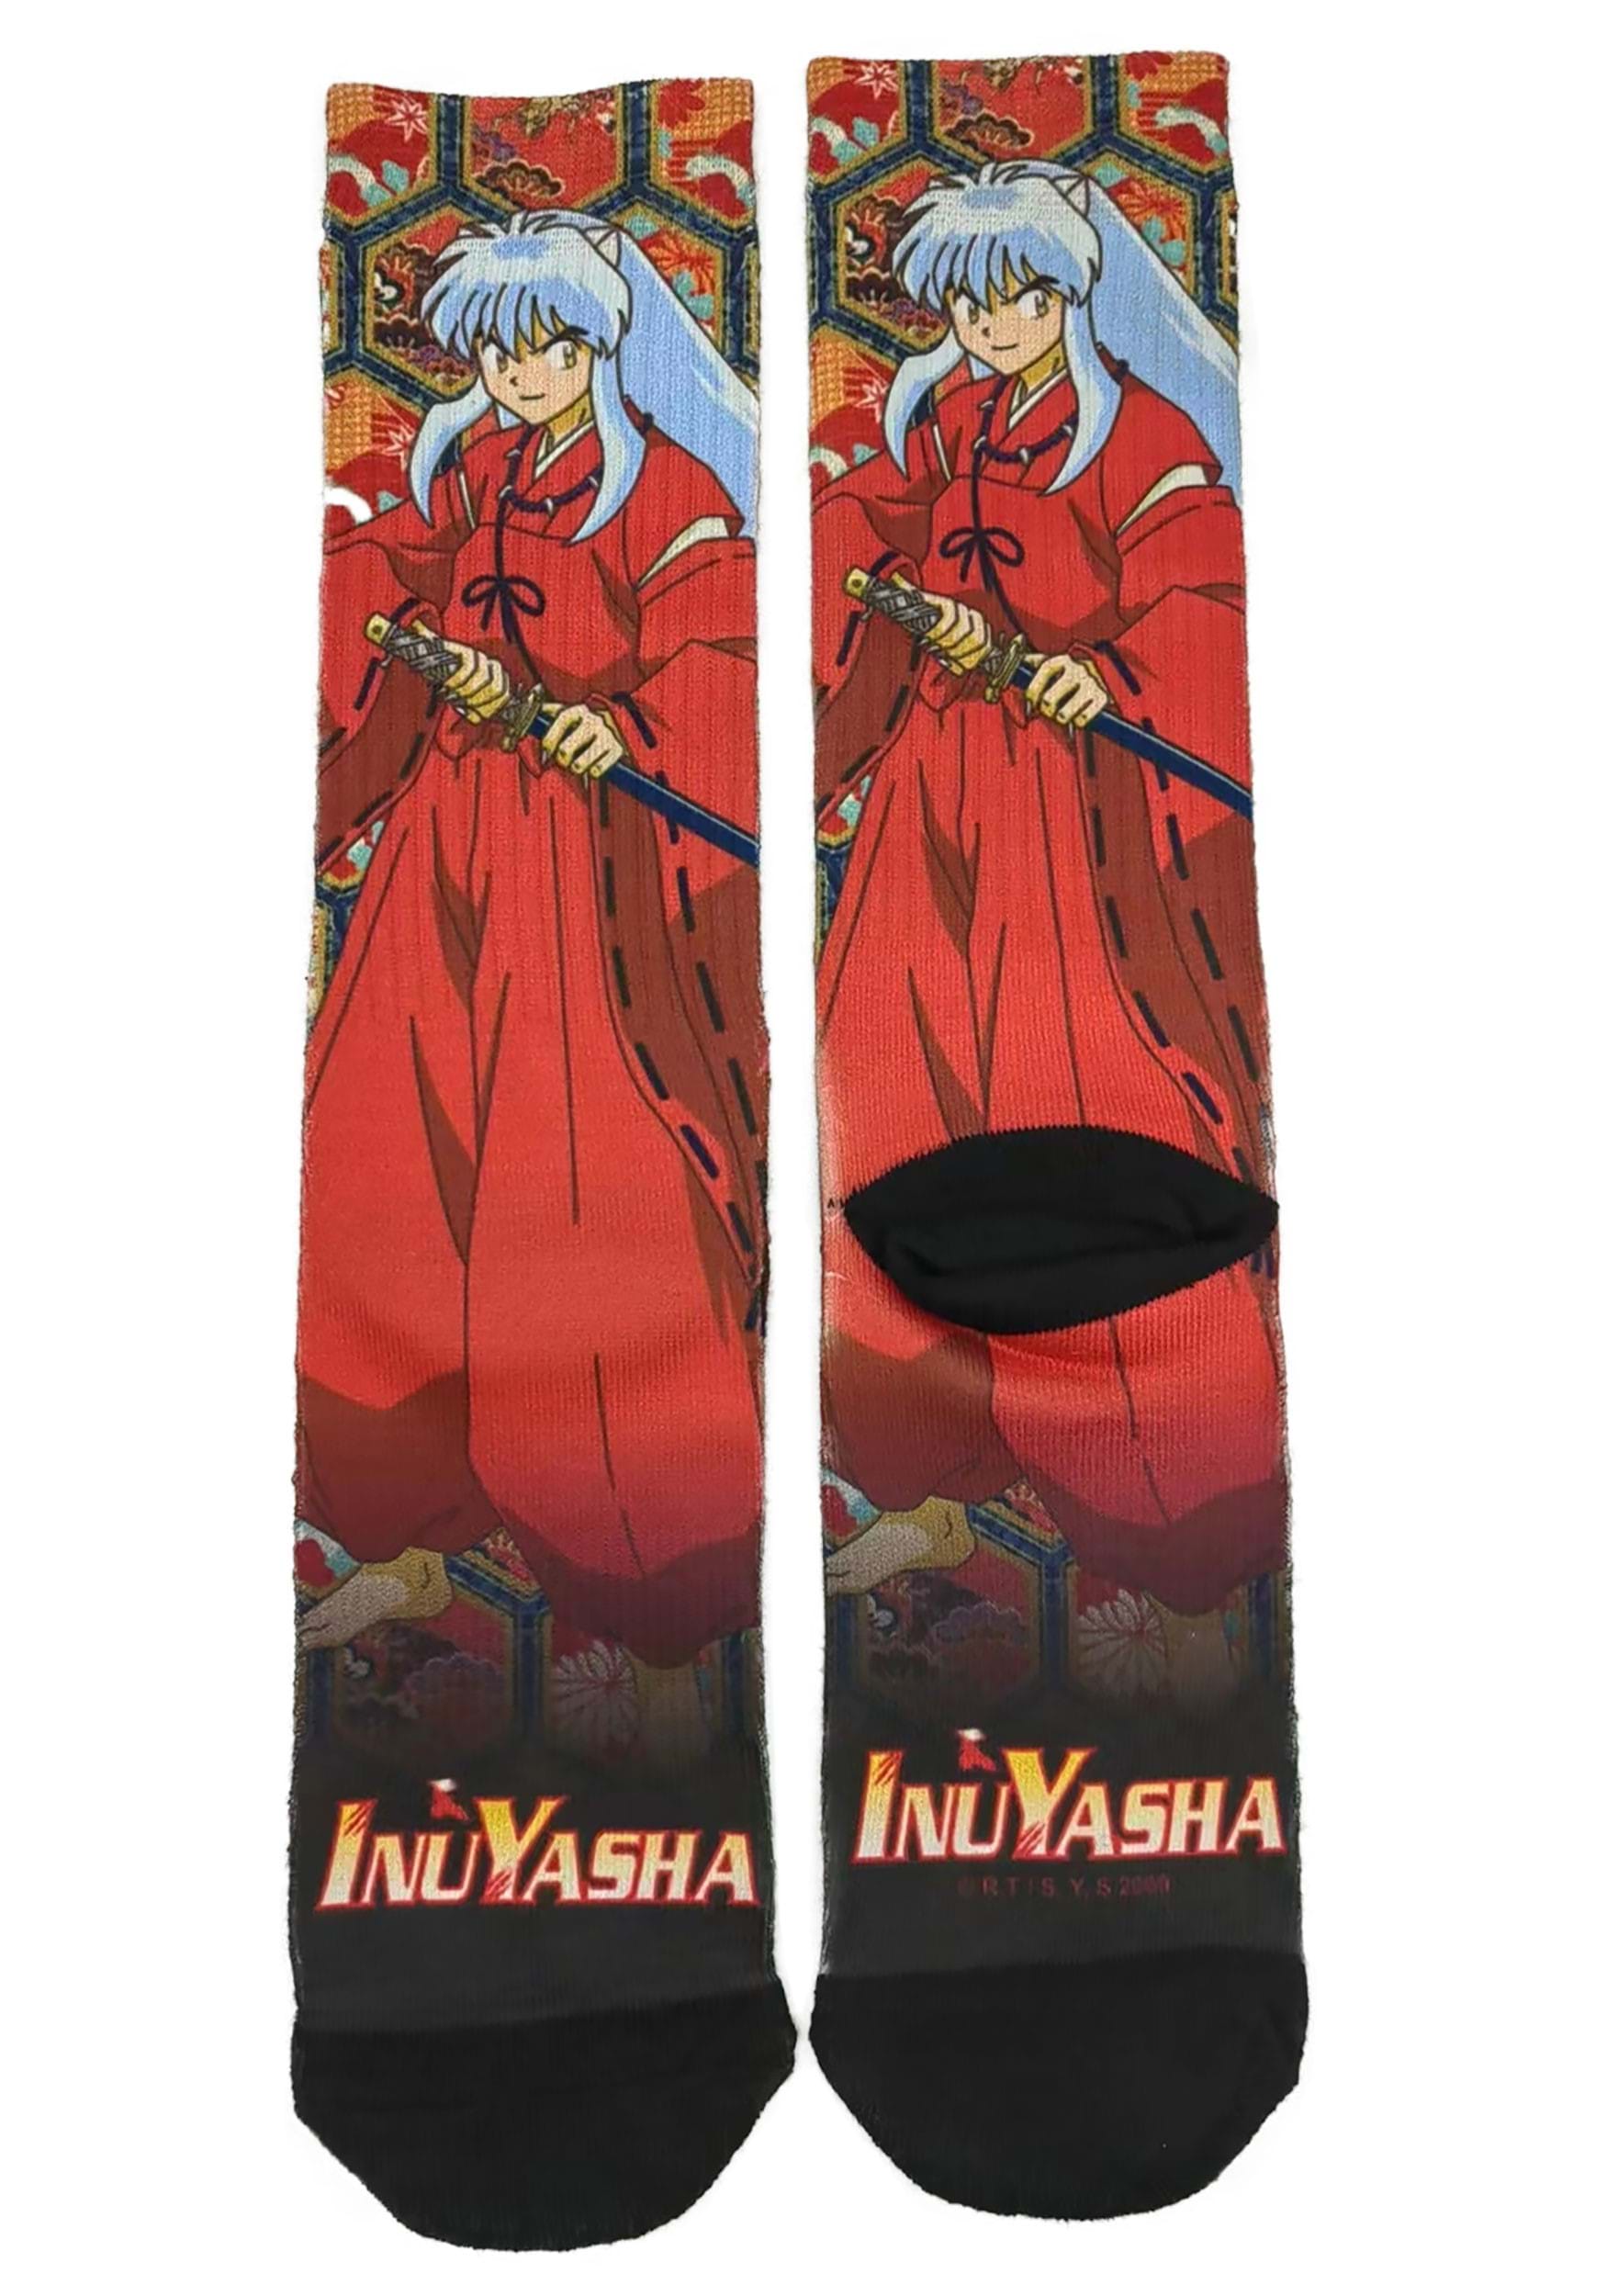 Inuyasha Crew Socks